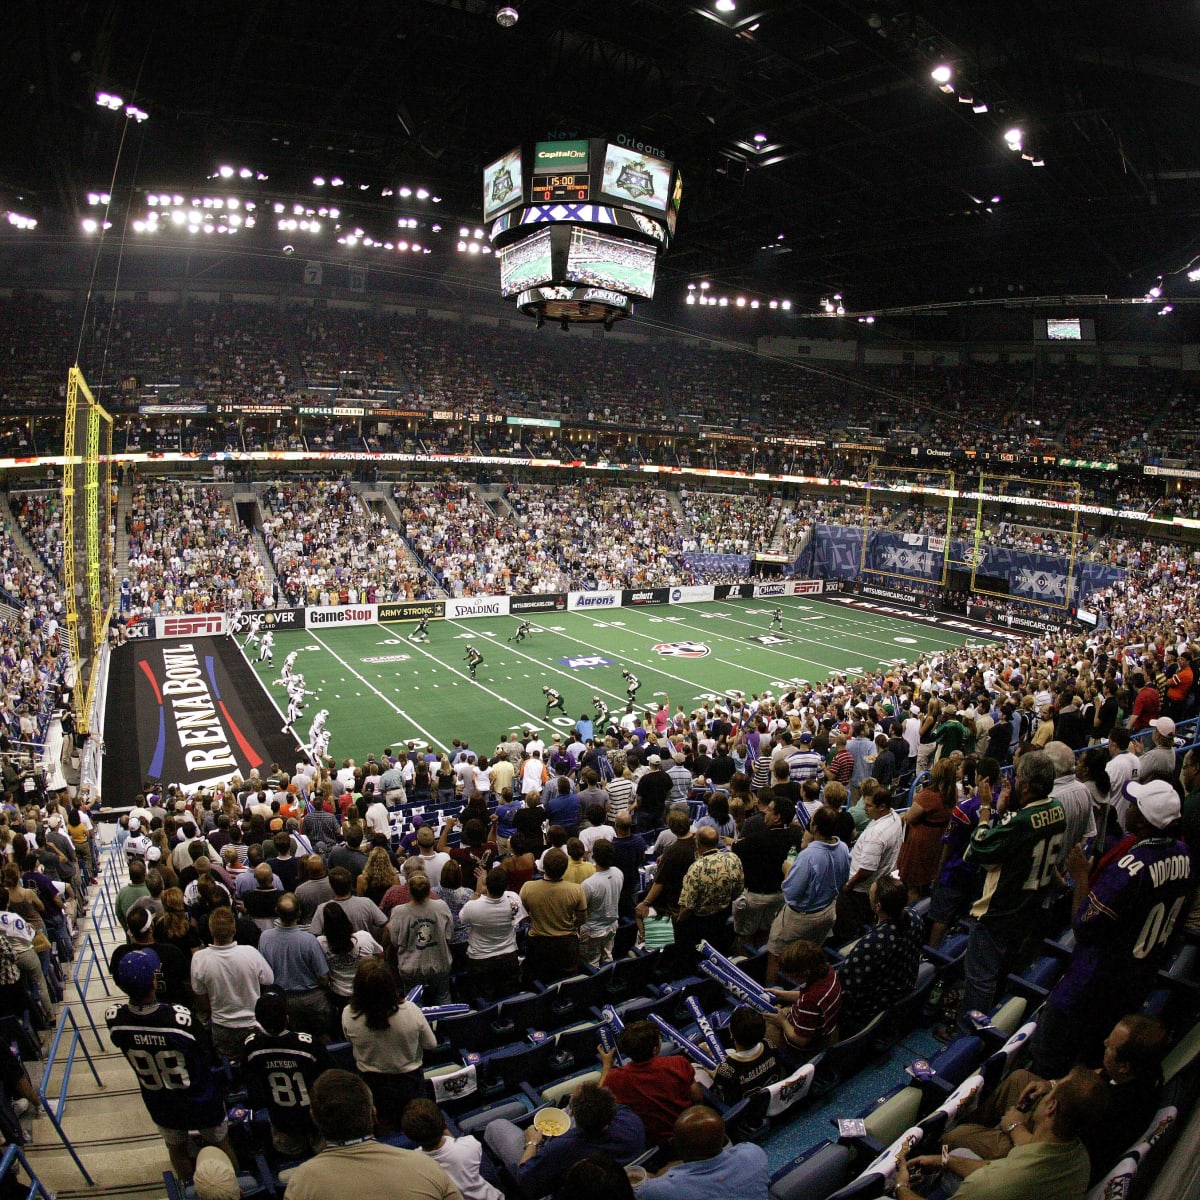 Cincinnati getting an Arena Football League team: Reports